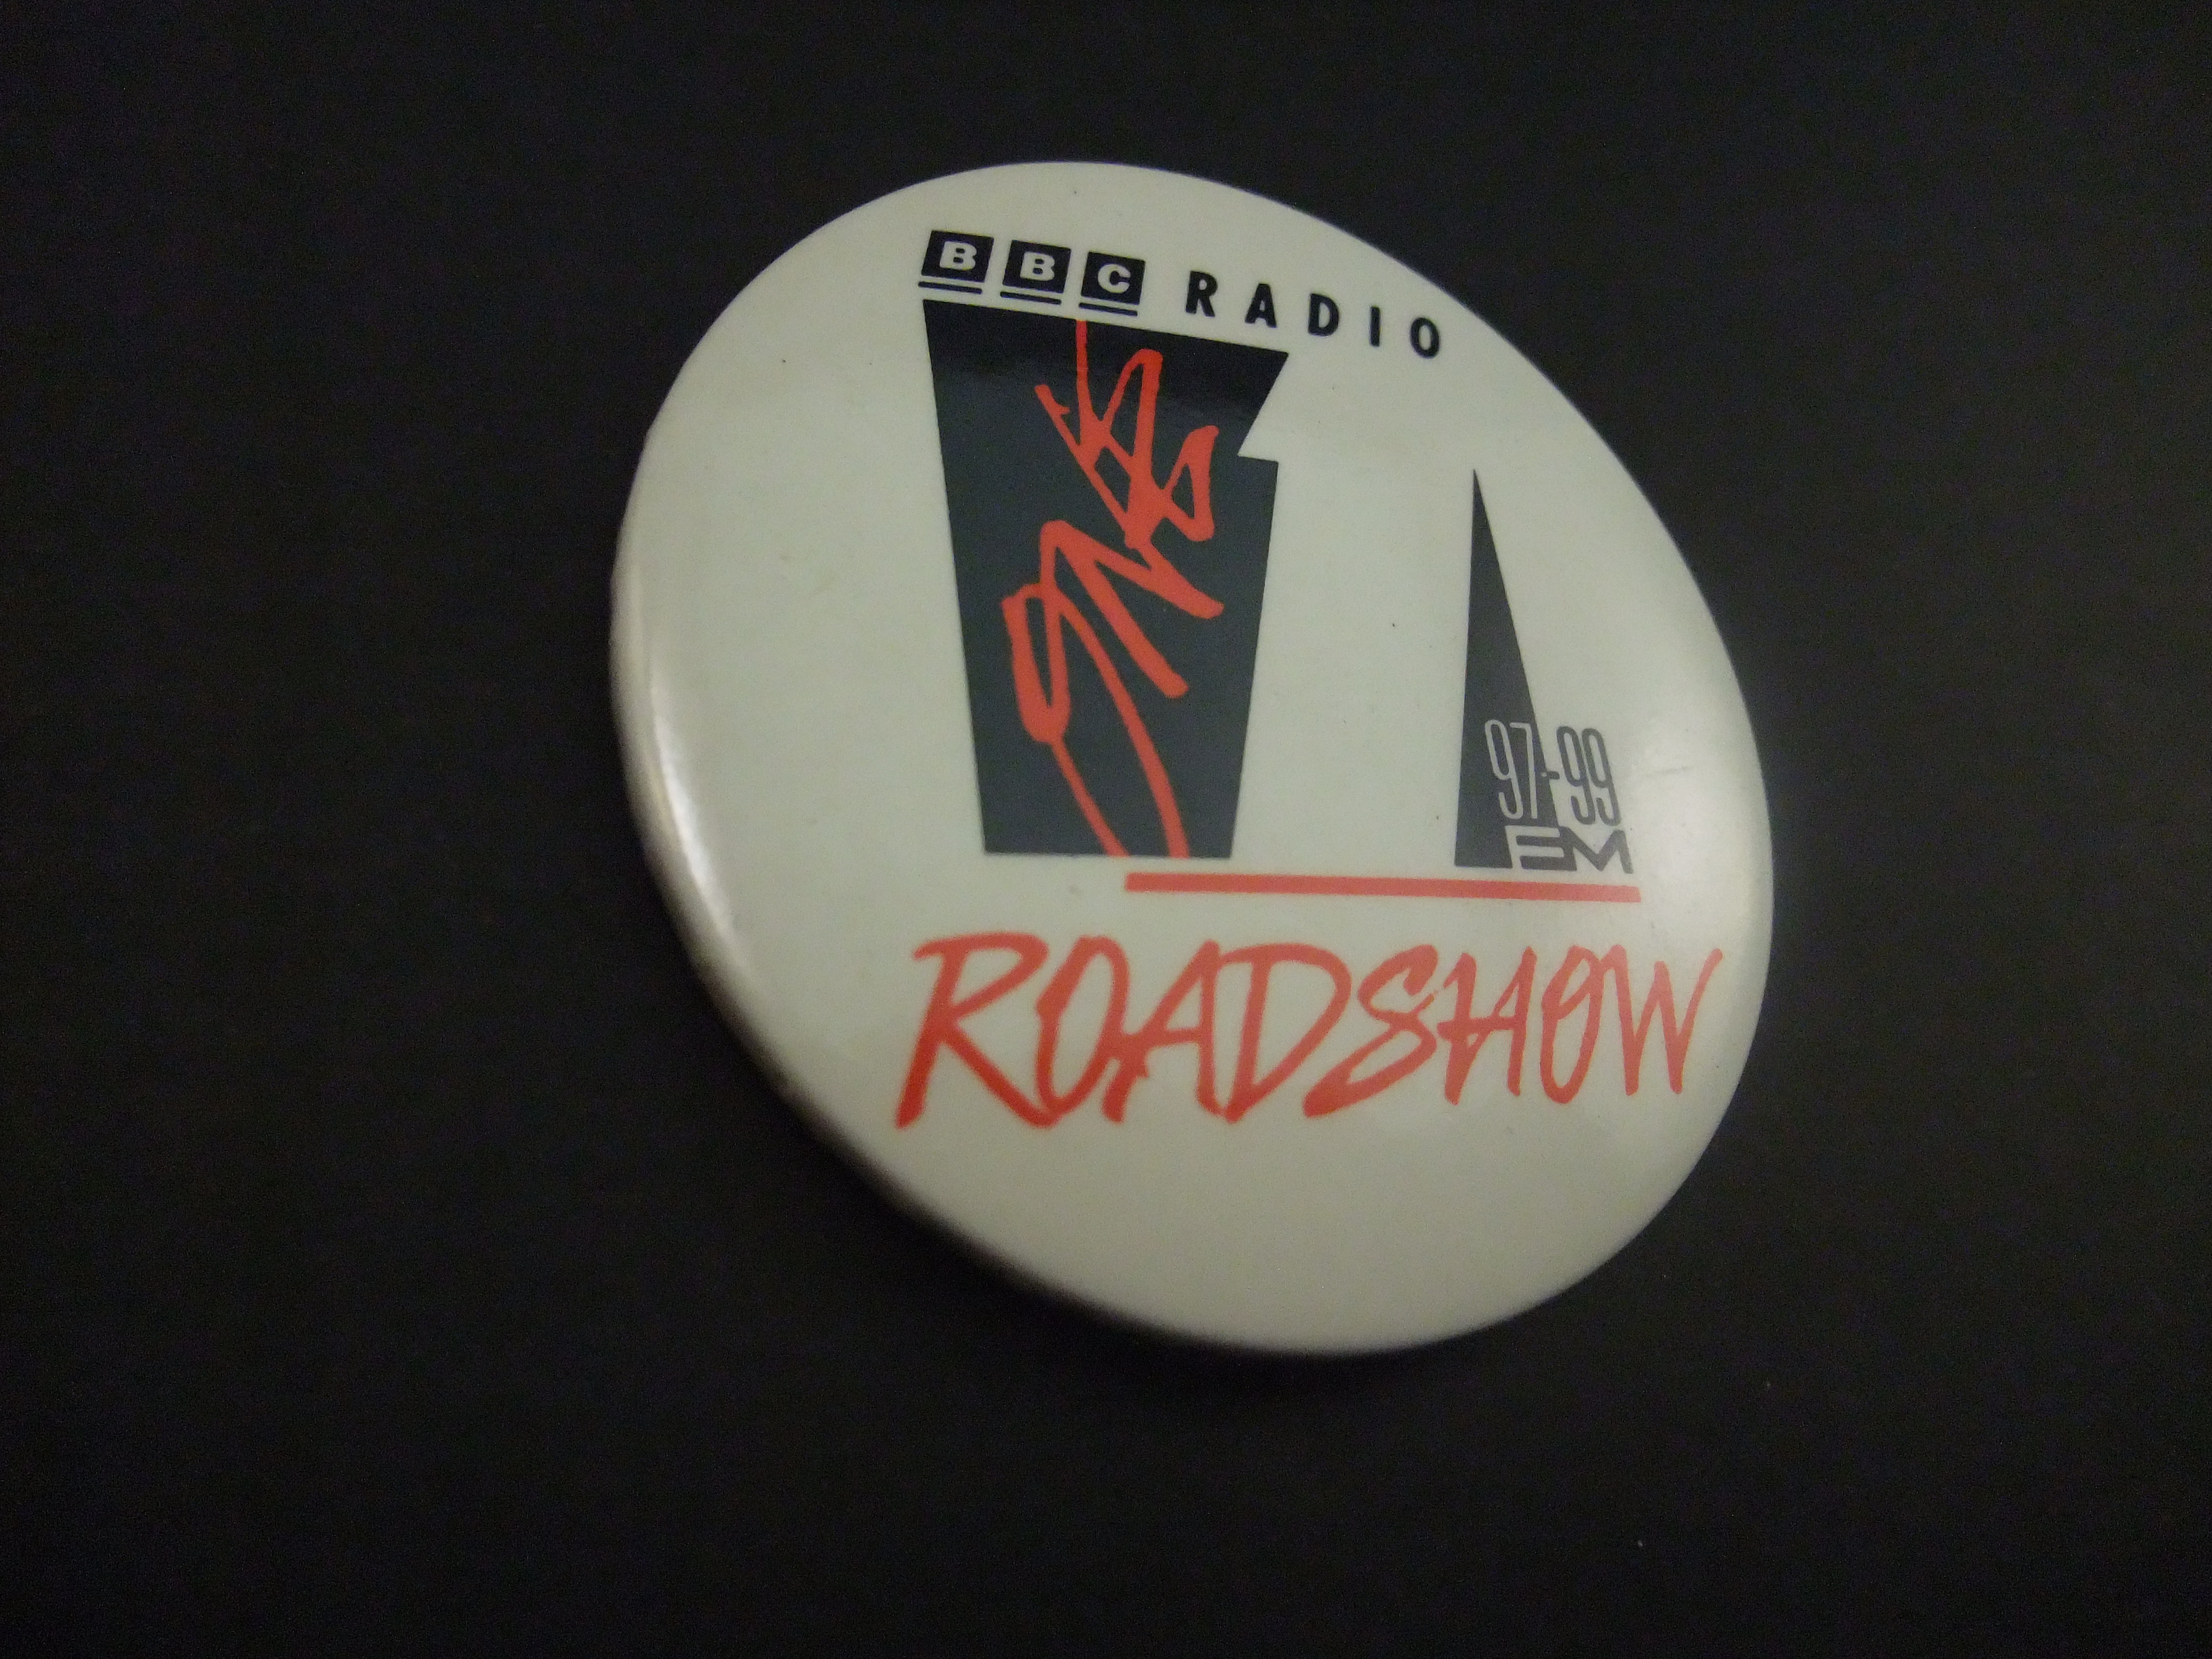 BBC radio One FM Road Show 97-99 FM